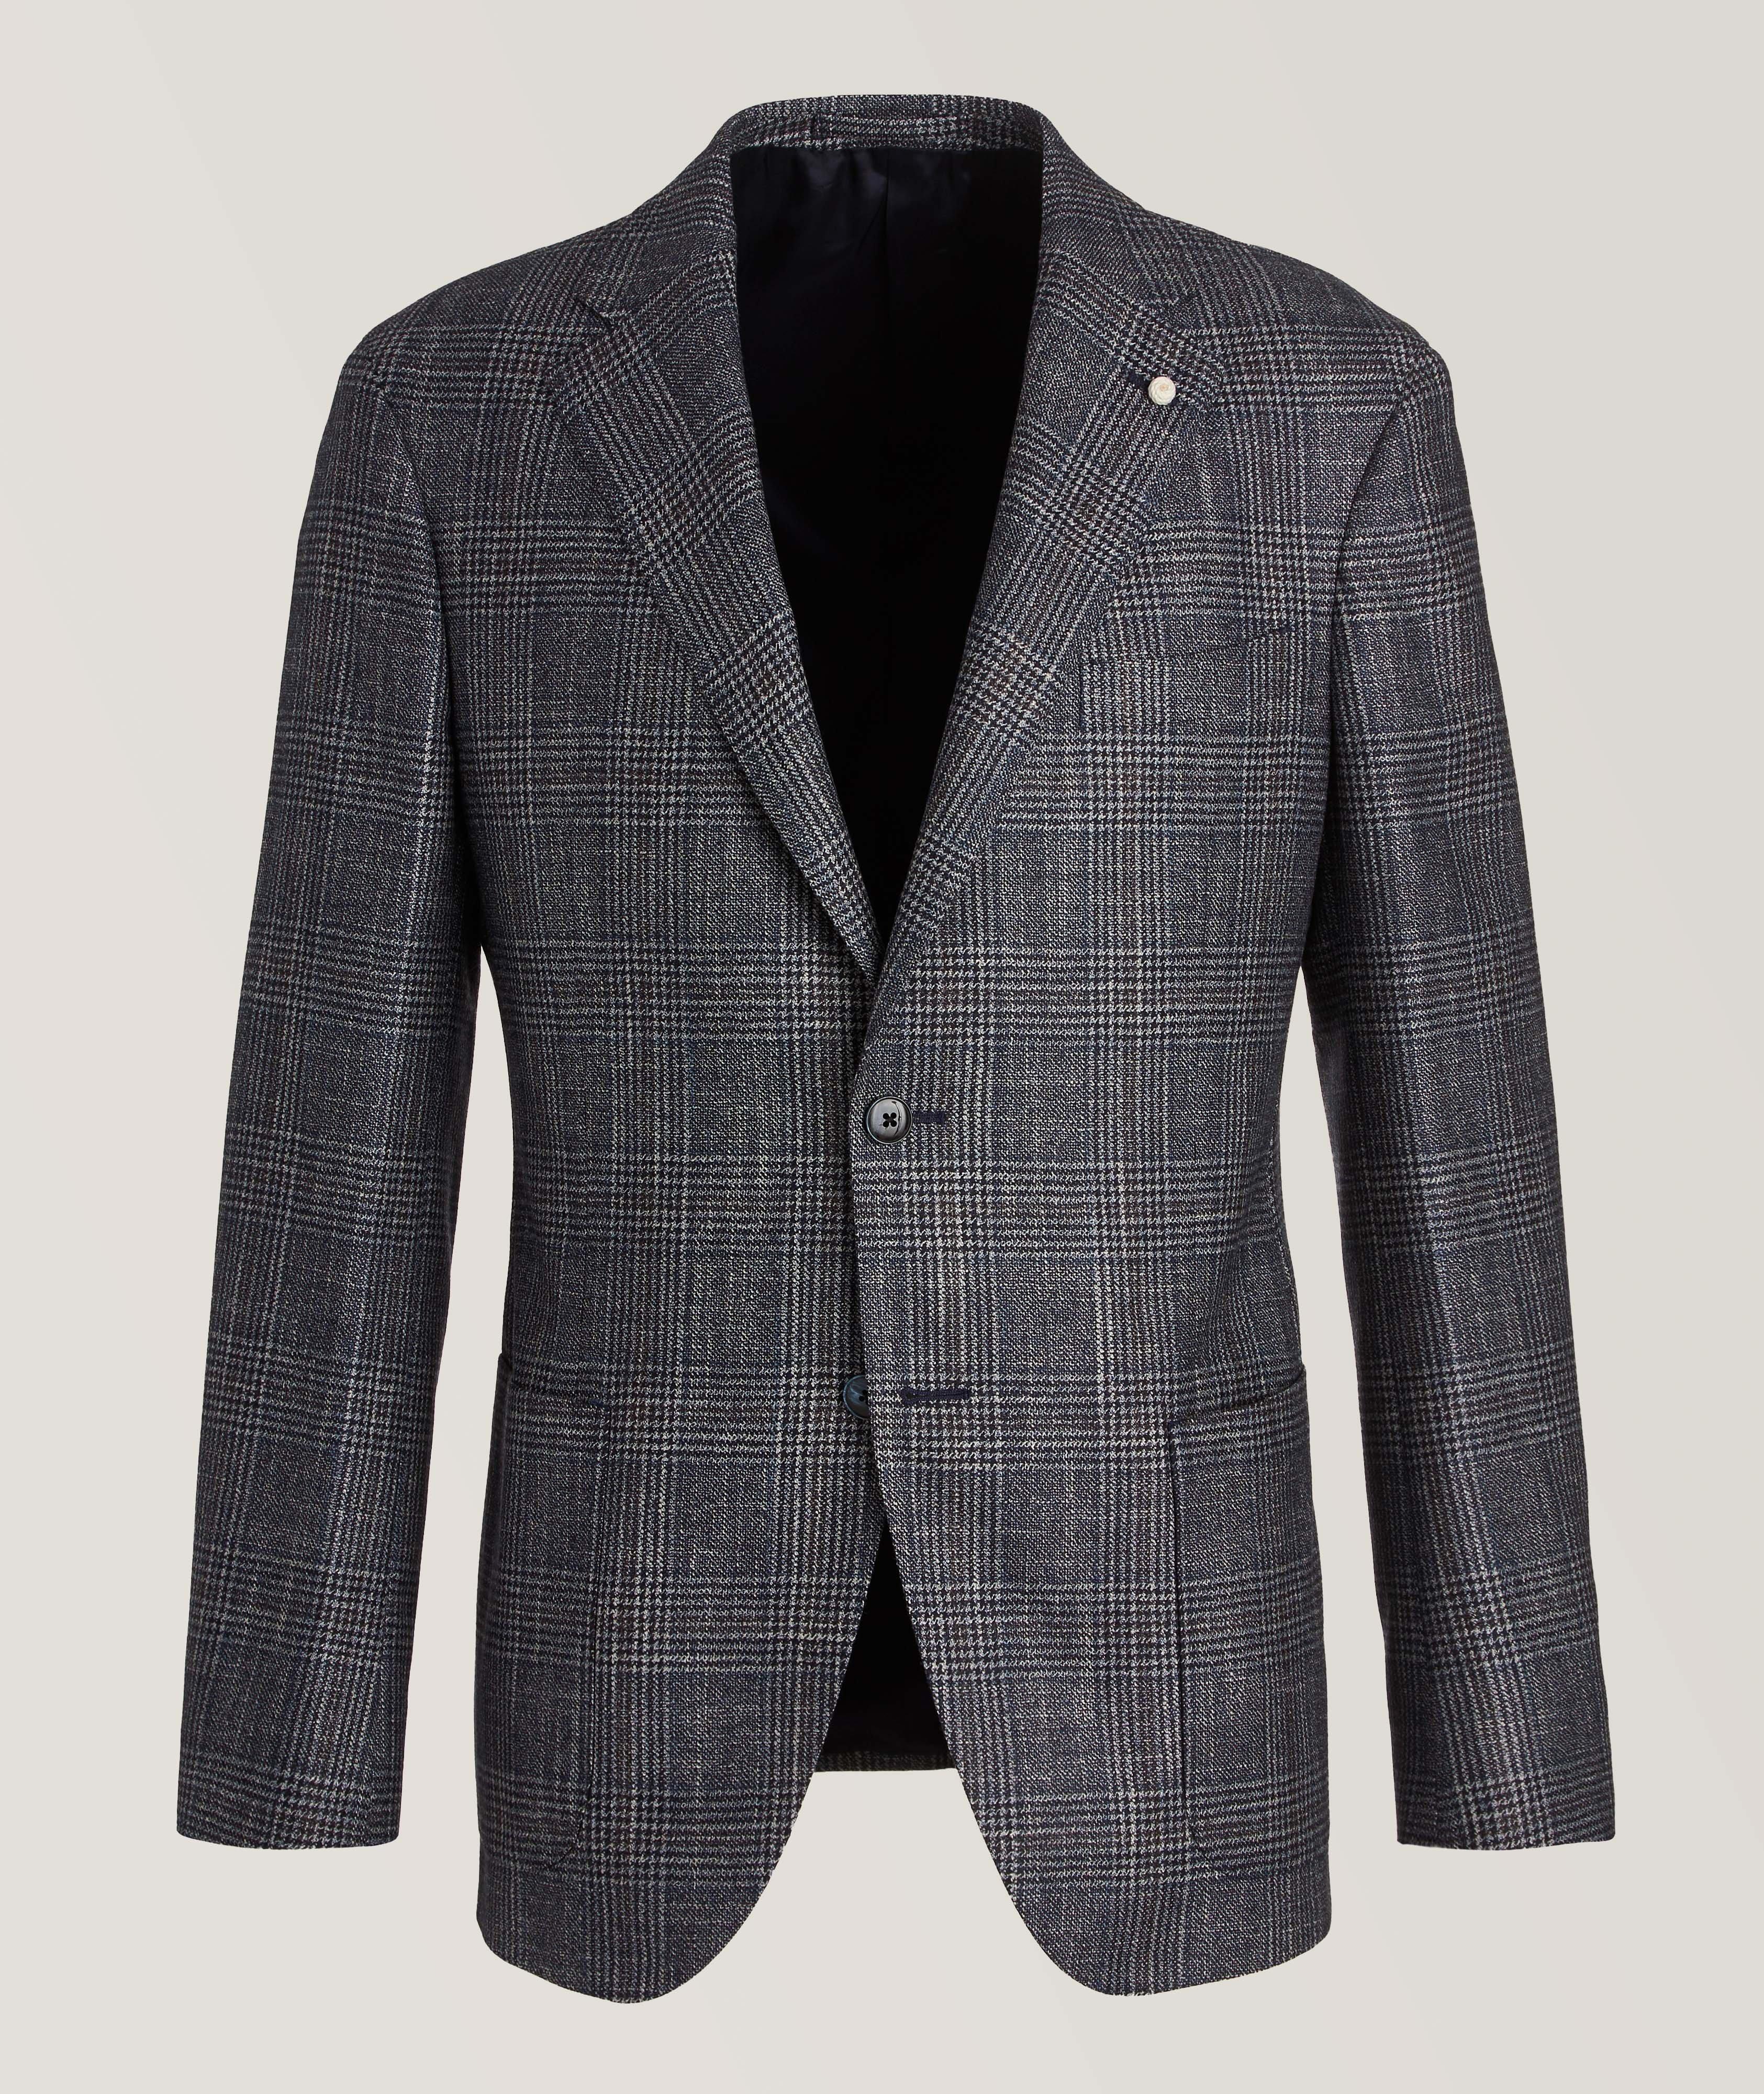 Glen Check Wool, Silk & Cashmere Sport Jacket image 0